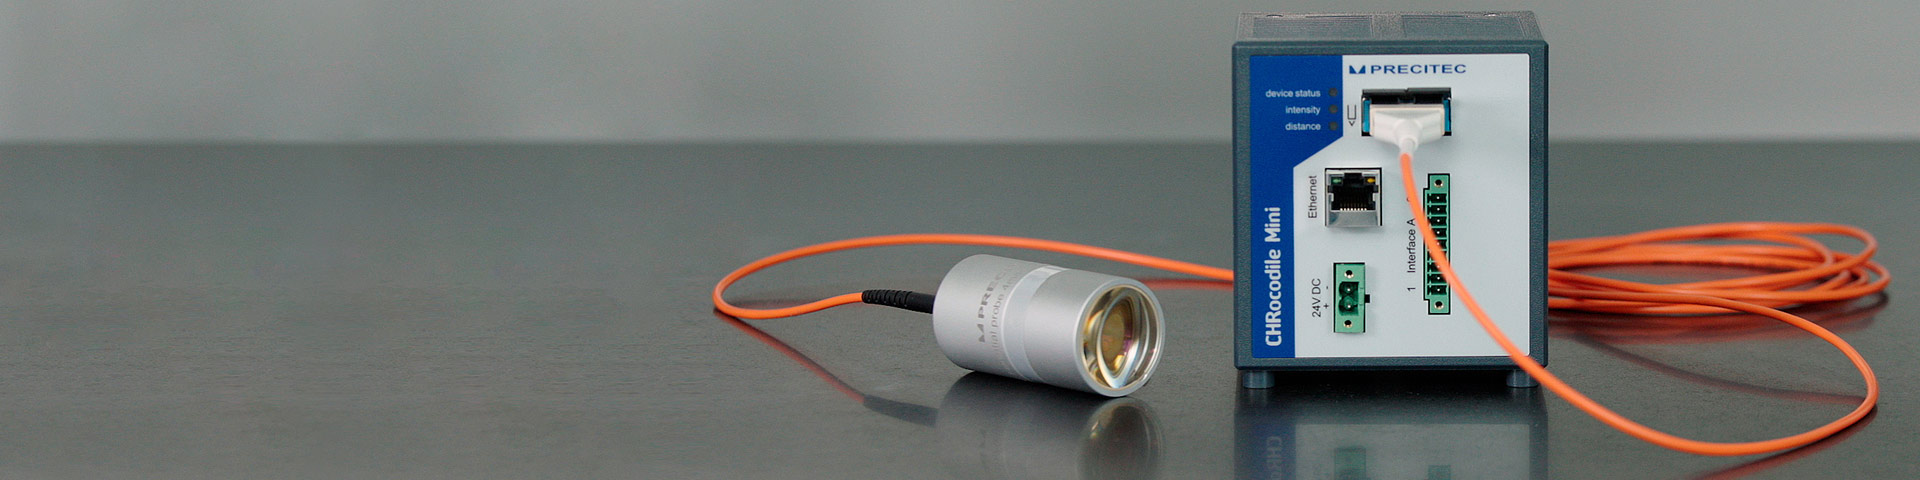 CHRocodile Mini confocal sensor and measuring probe